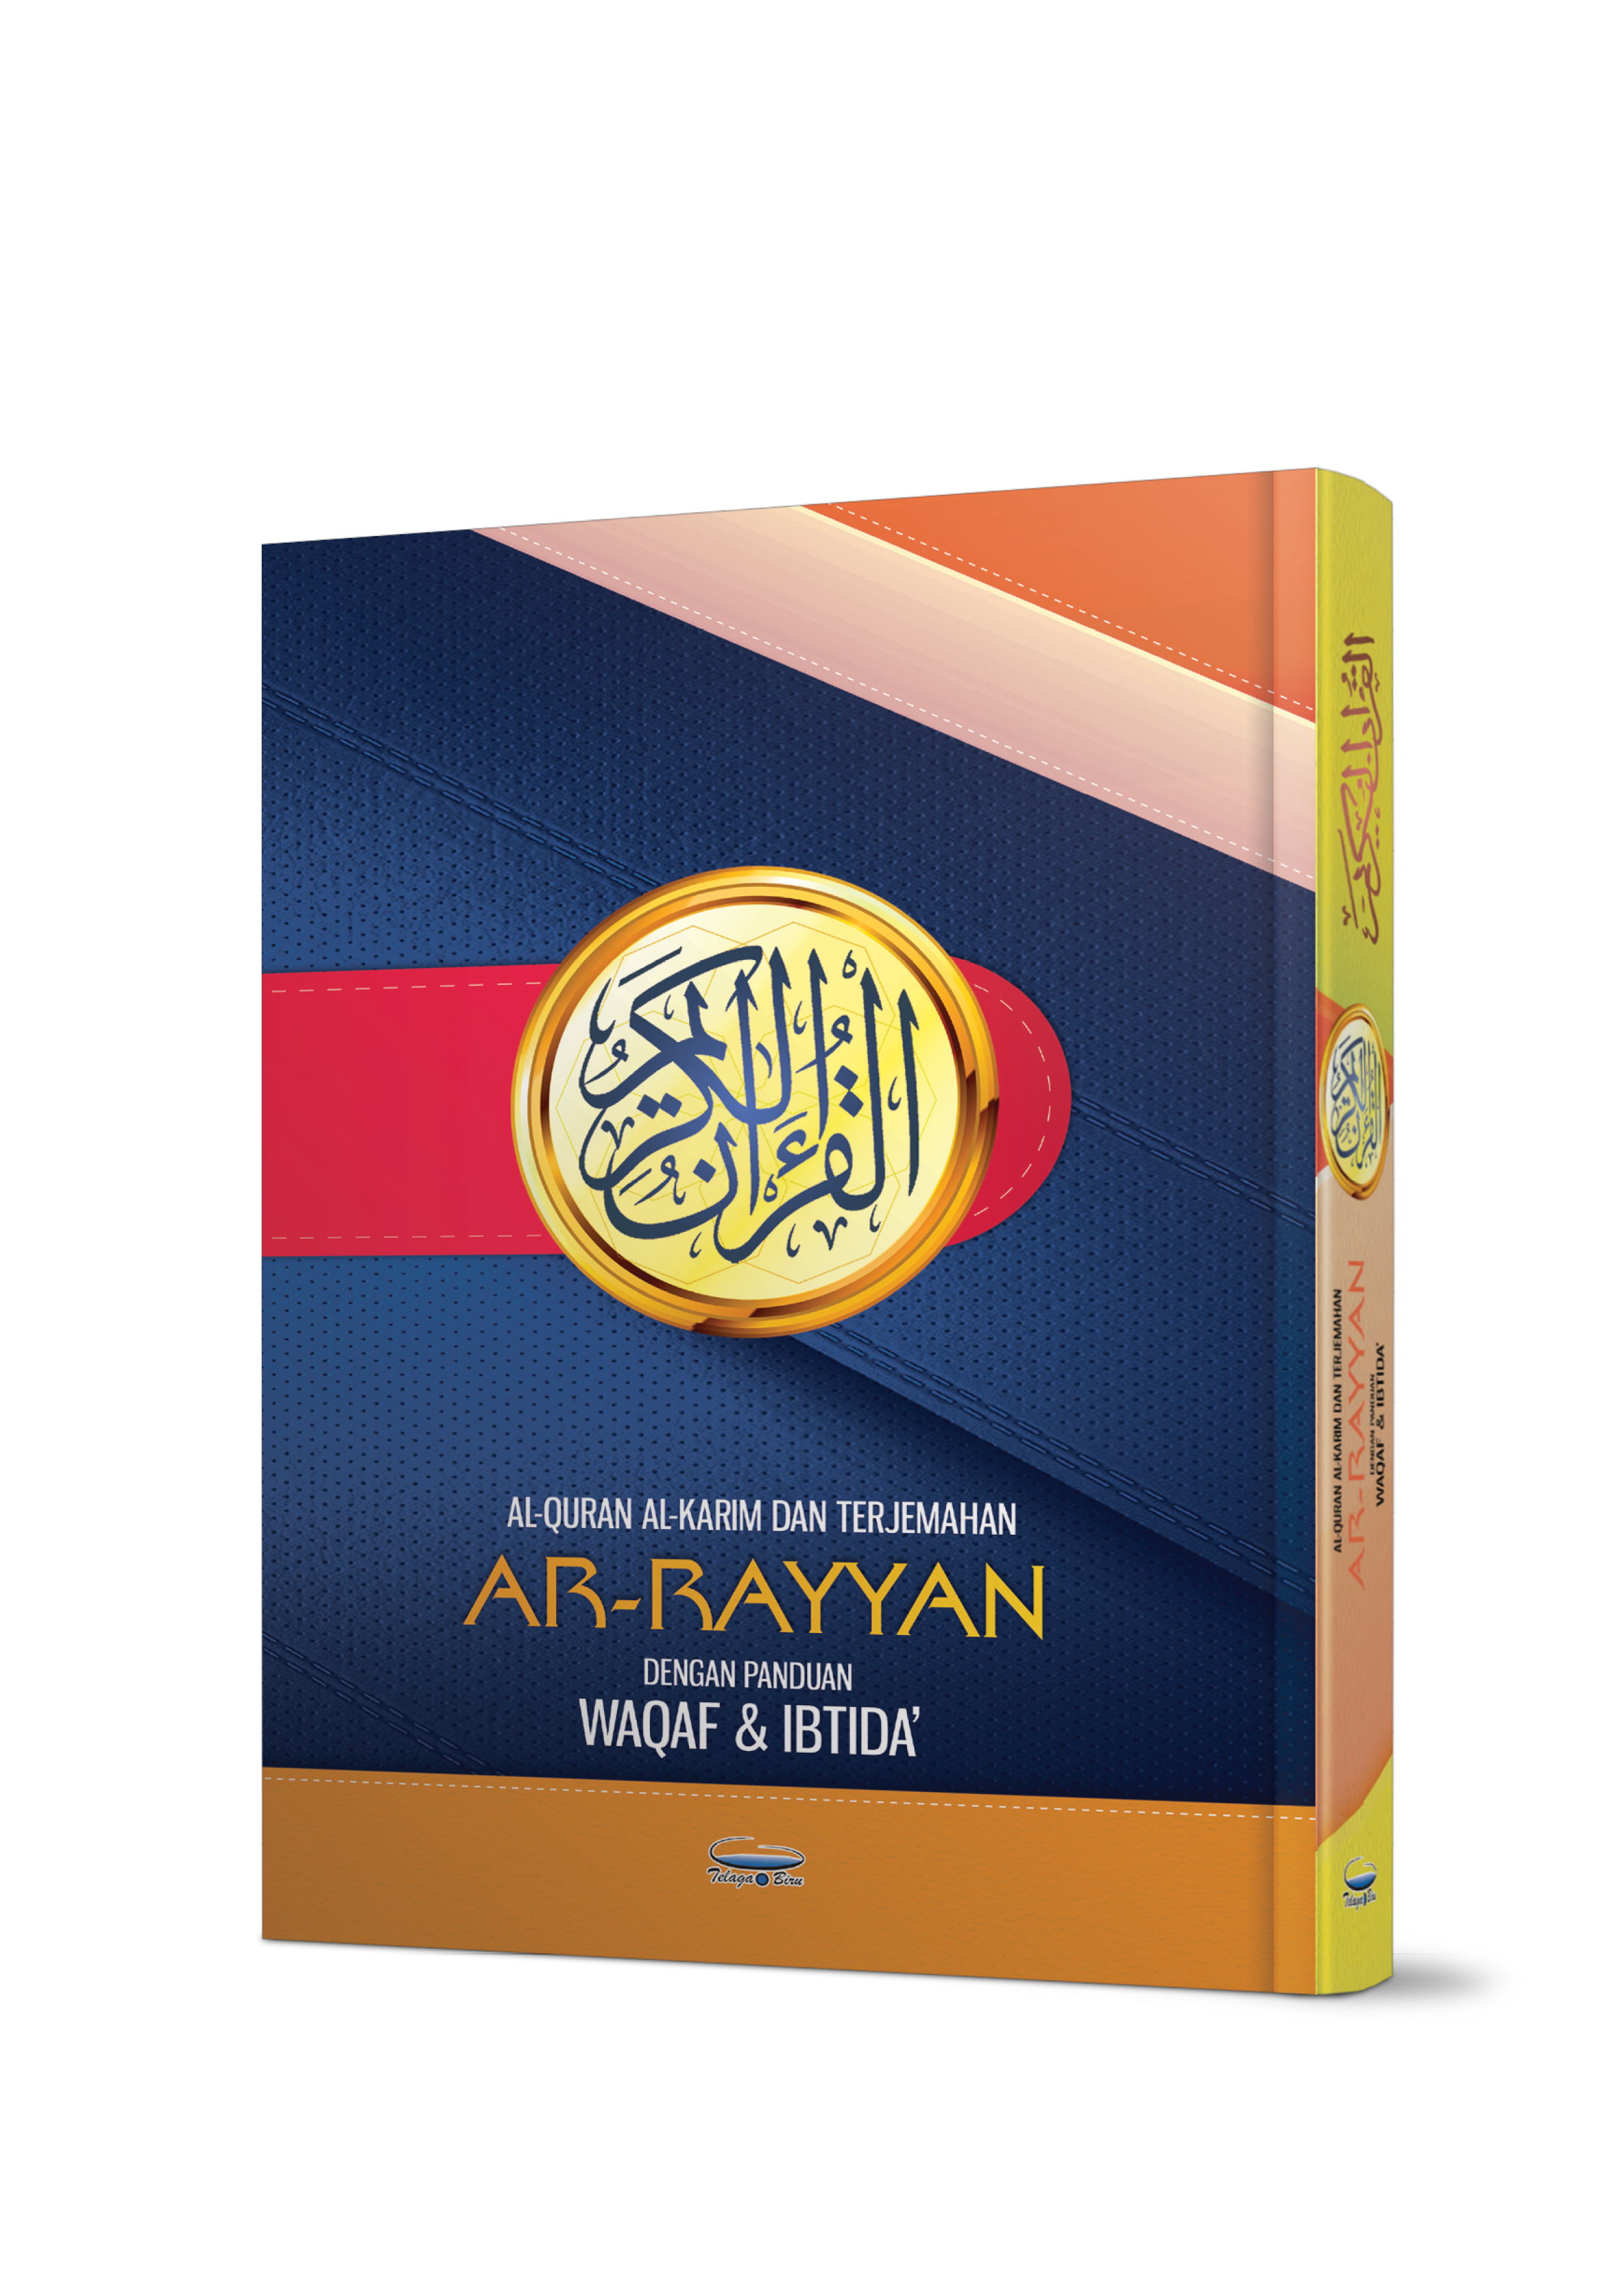 Al-Quran Al-Karim & Terjemahan Ar-Rayyan dengan Panduan Waqaf & Ibtida' - (TBAQ1010)